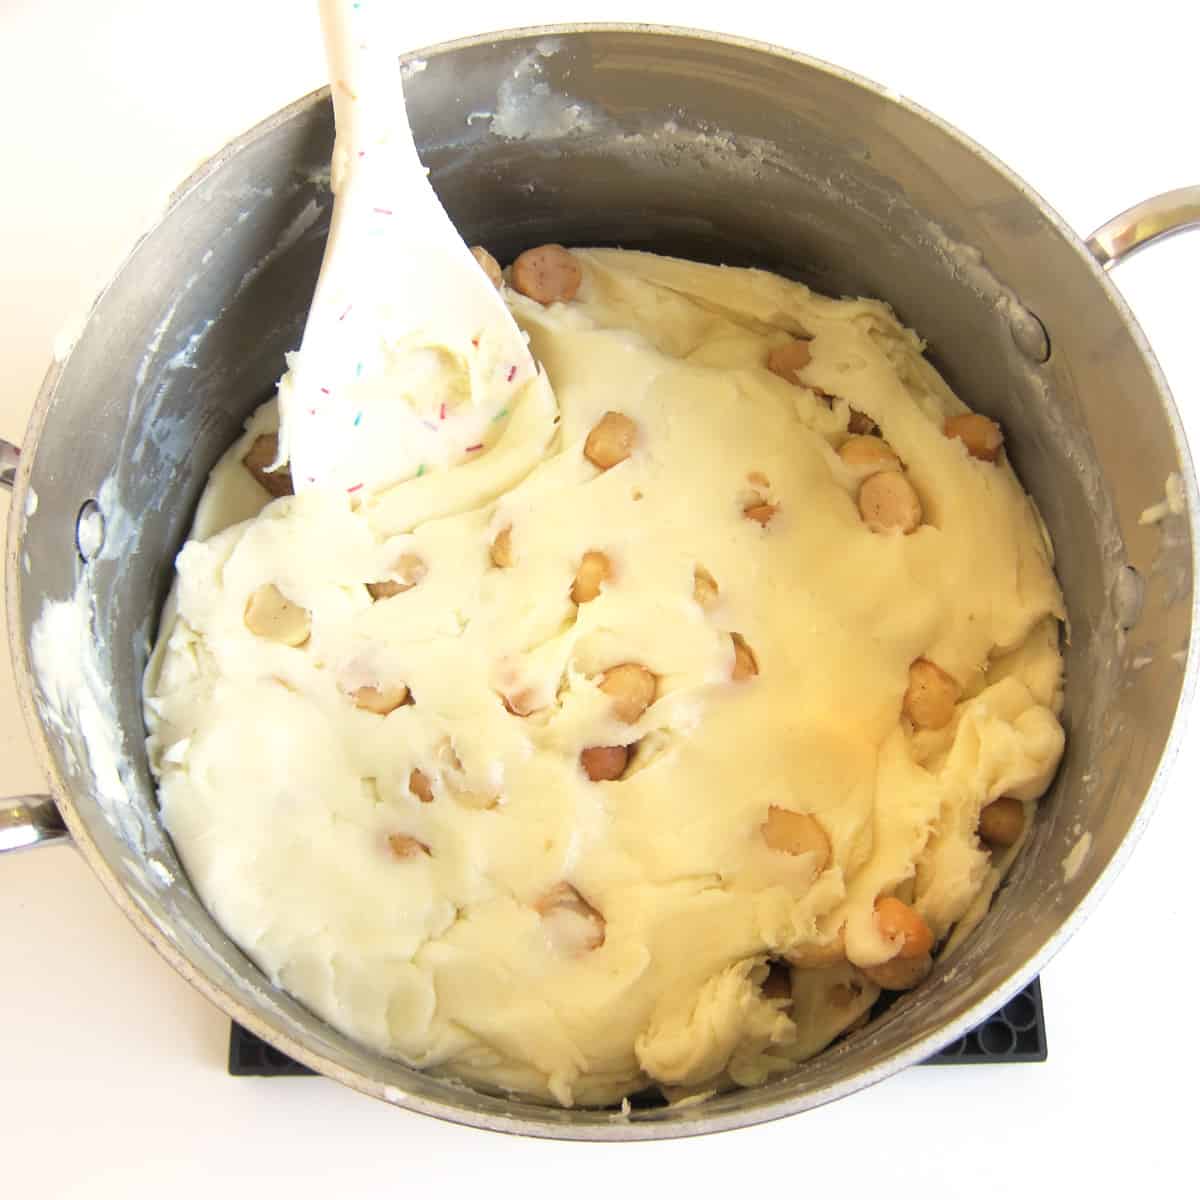 Macadamia nut fudge mixed in saucepan.